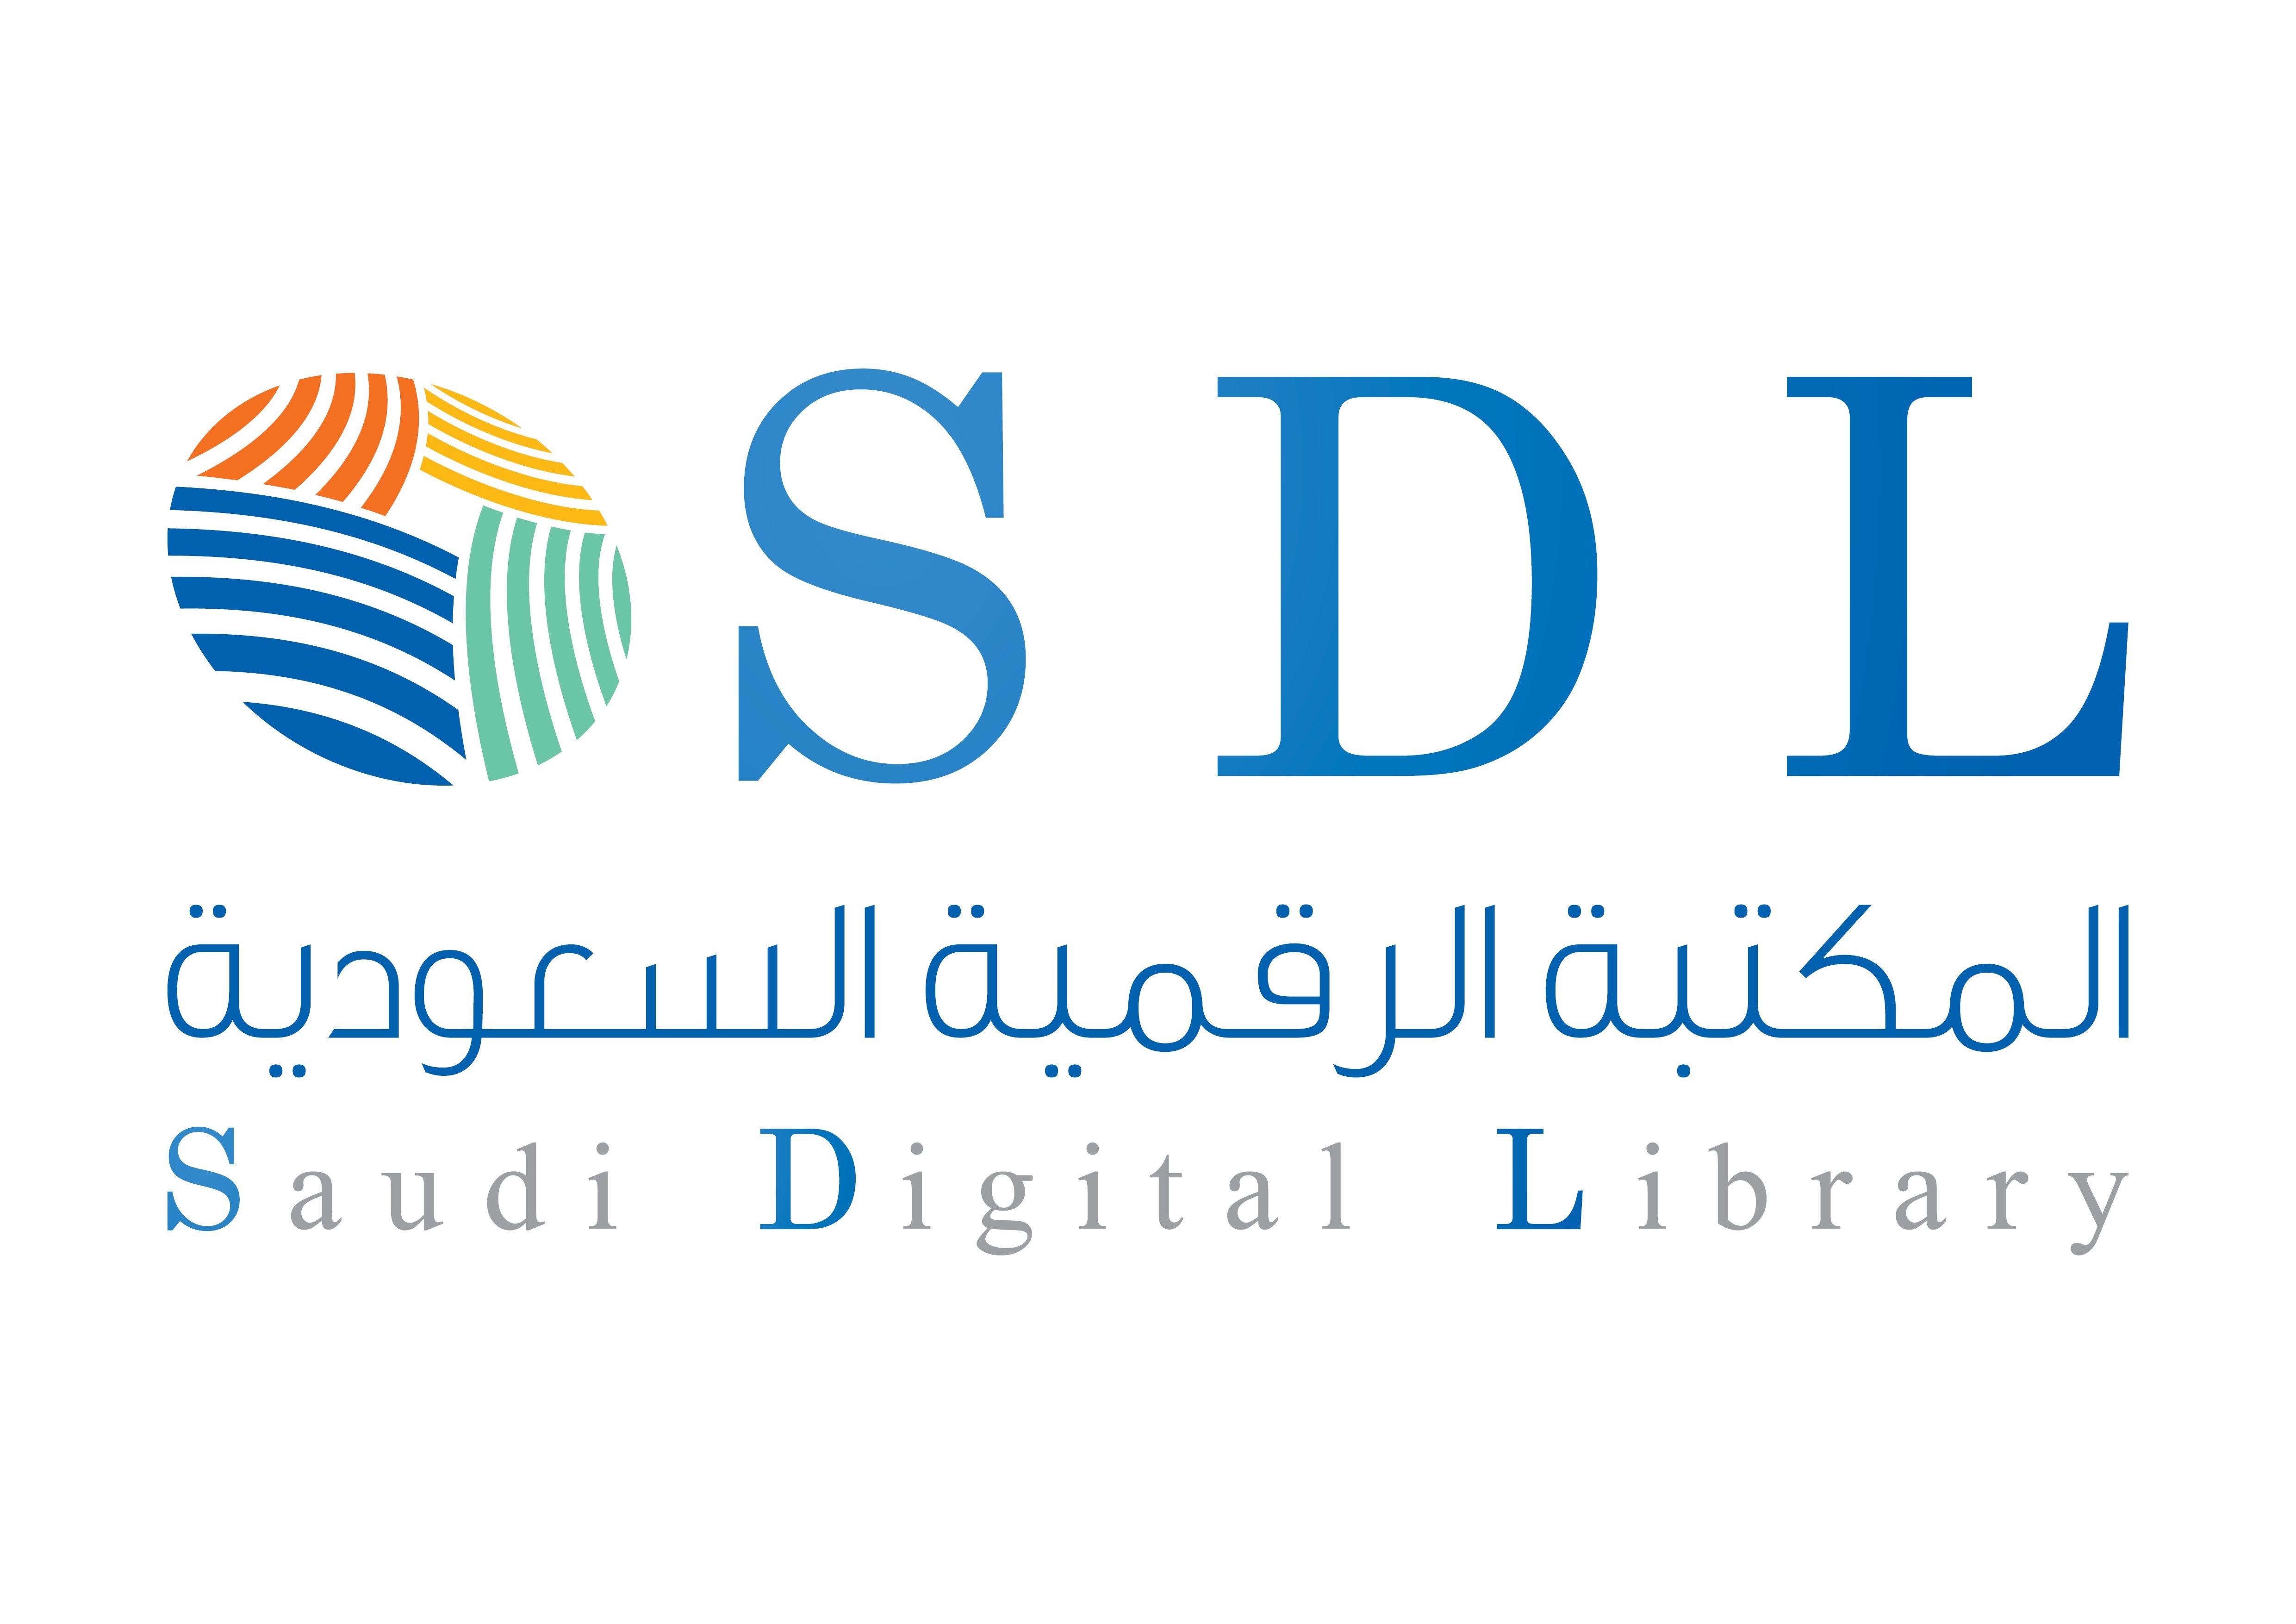 SDL Logo - File:Saudi Digital Library (SDL) logo.jpg - Wikimedia Commons